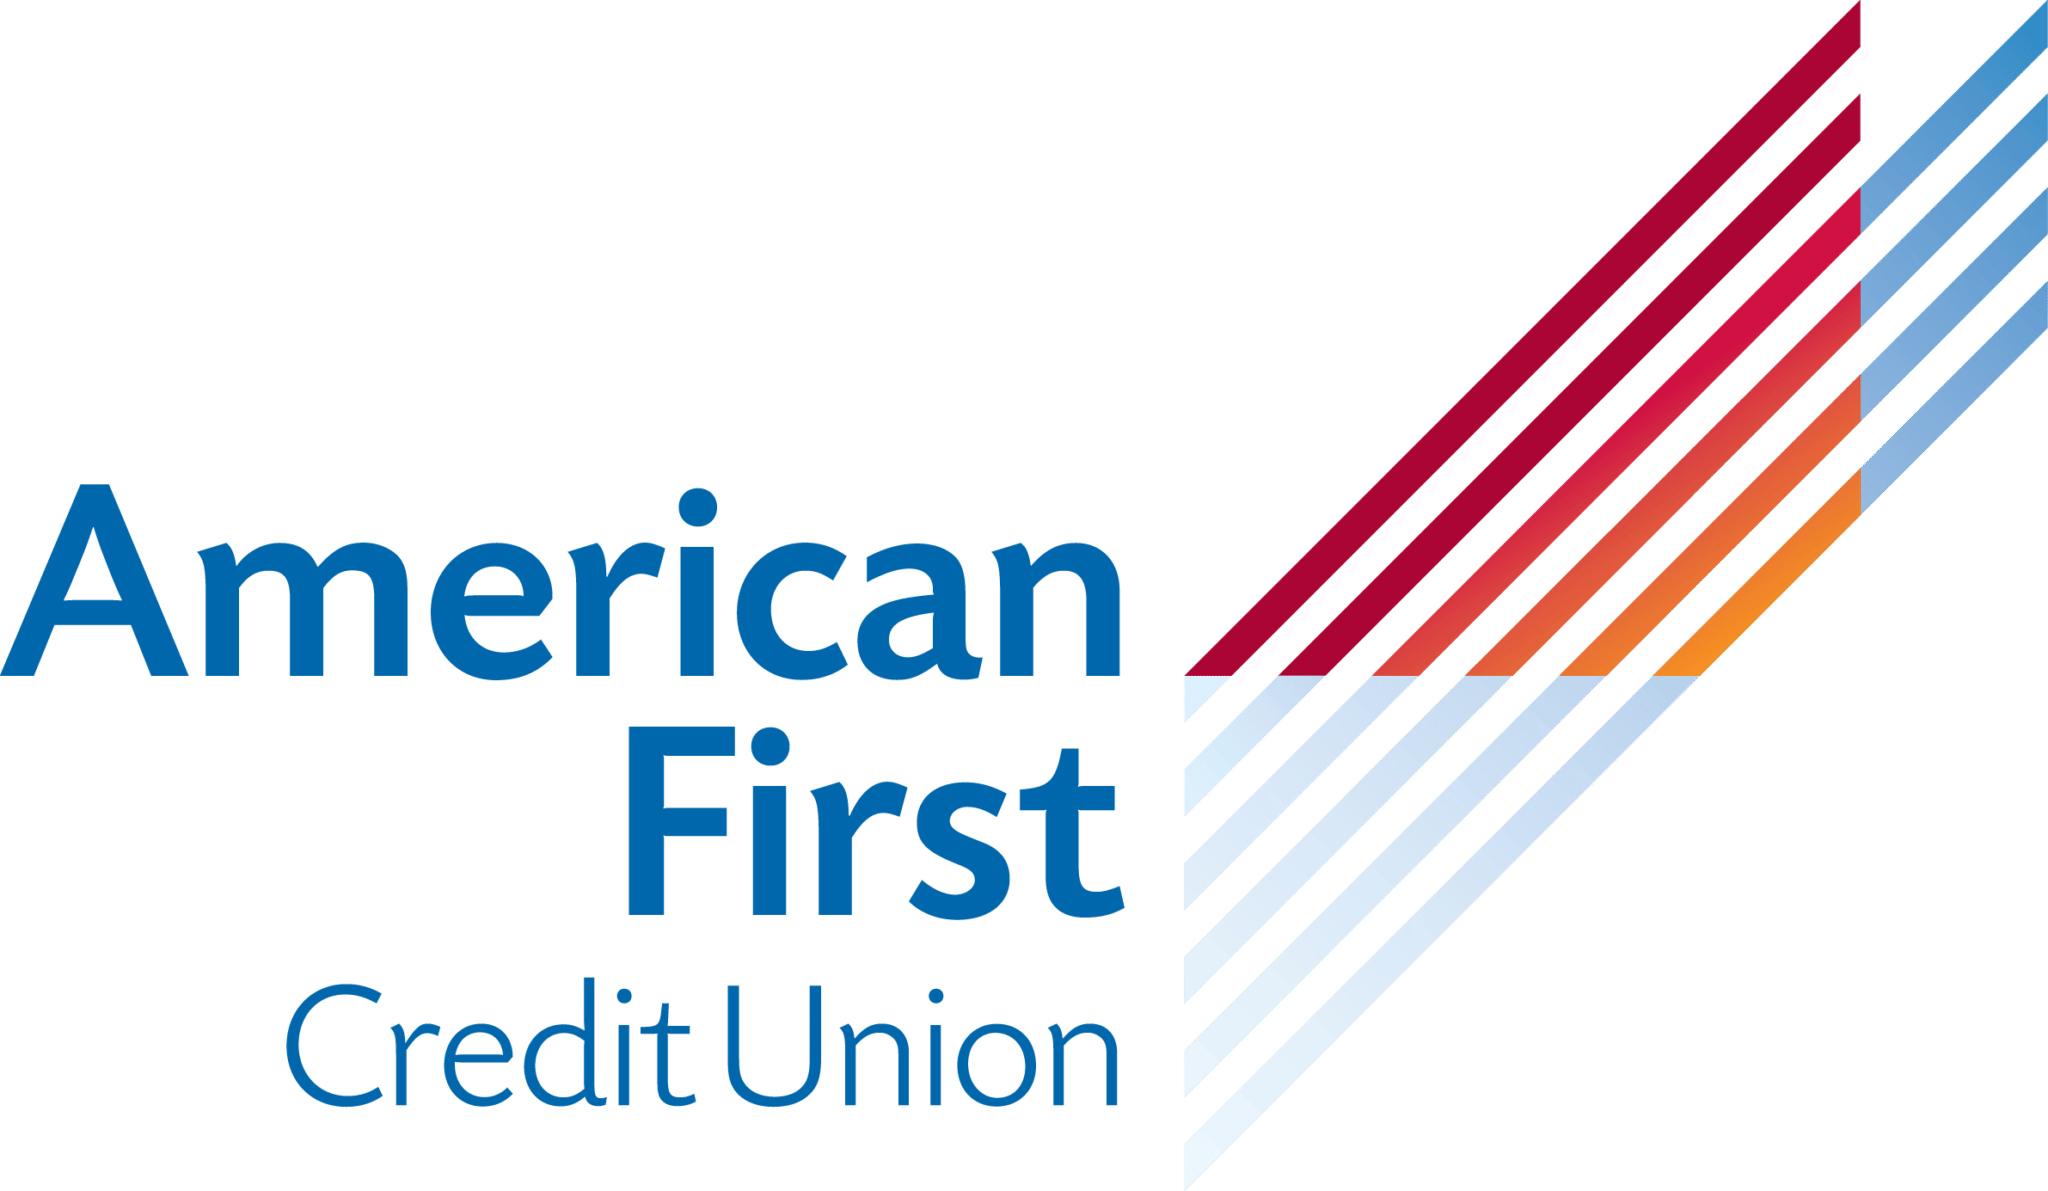 Vio Bank Money Market Account Comparison: American First Credit Union